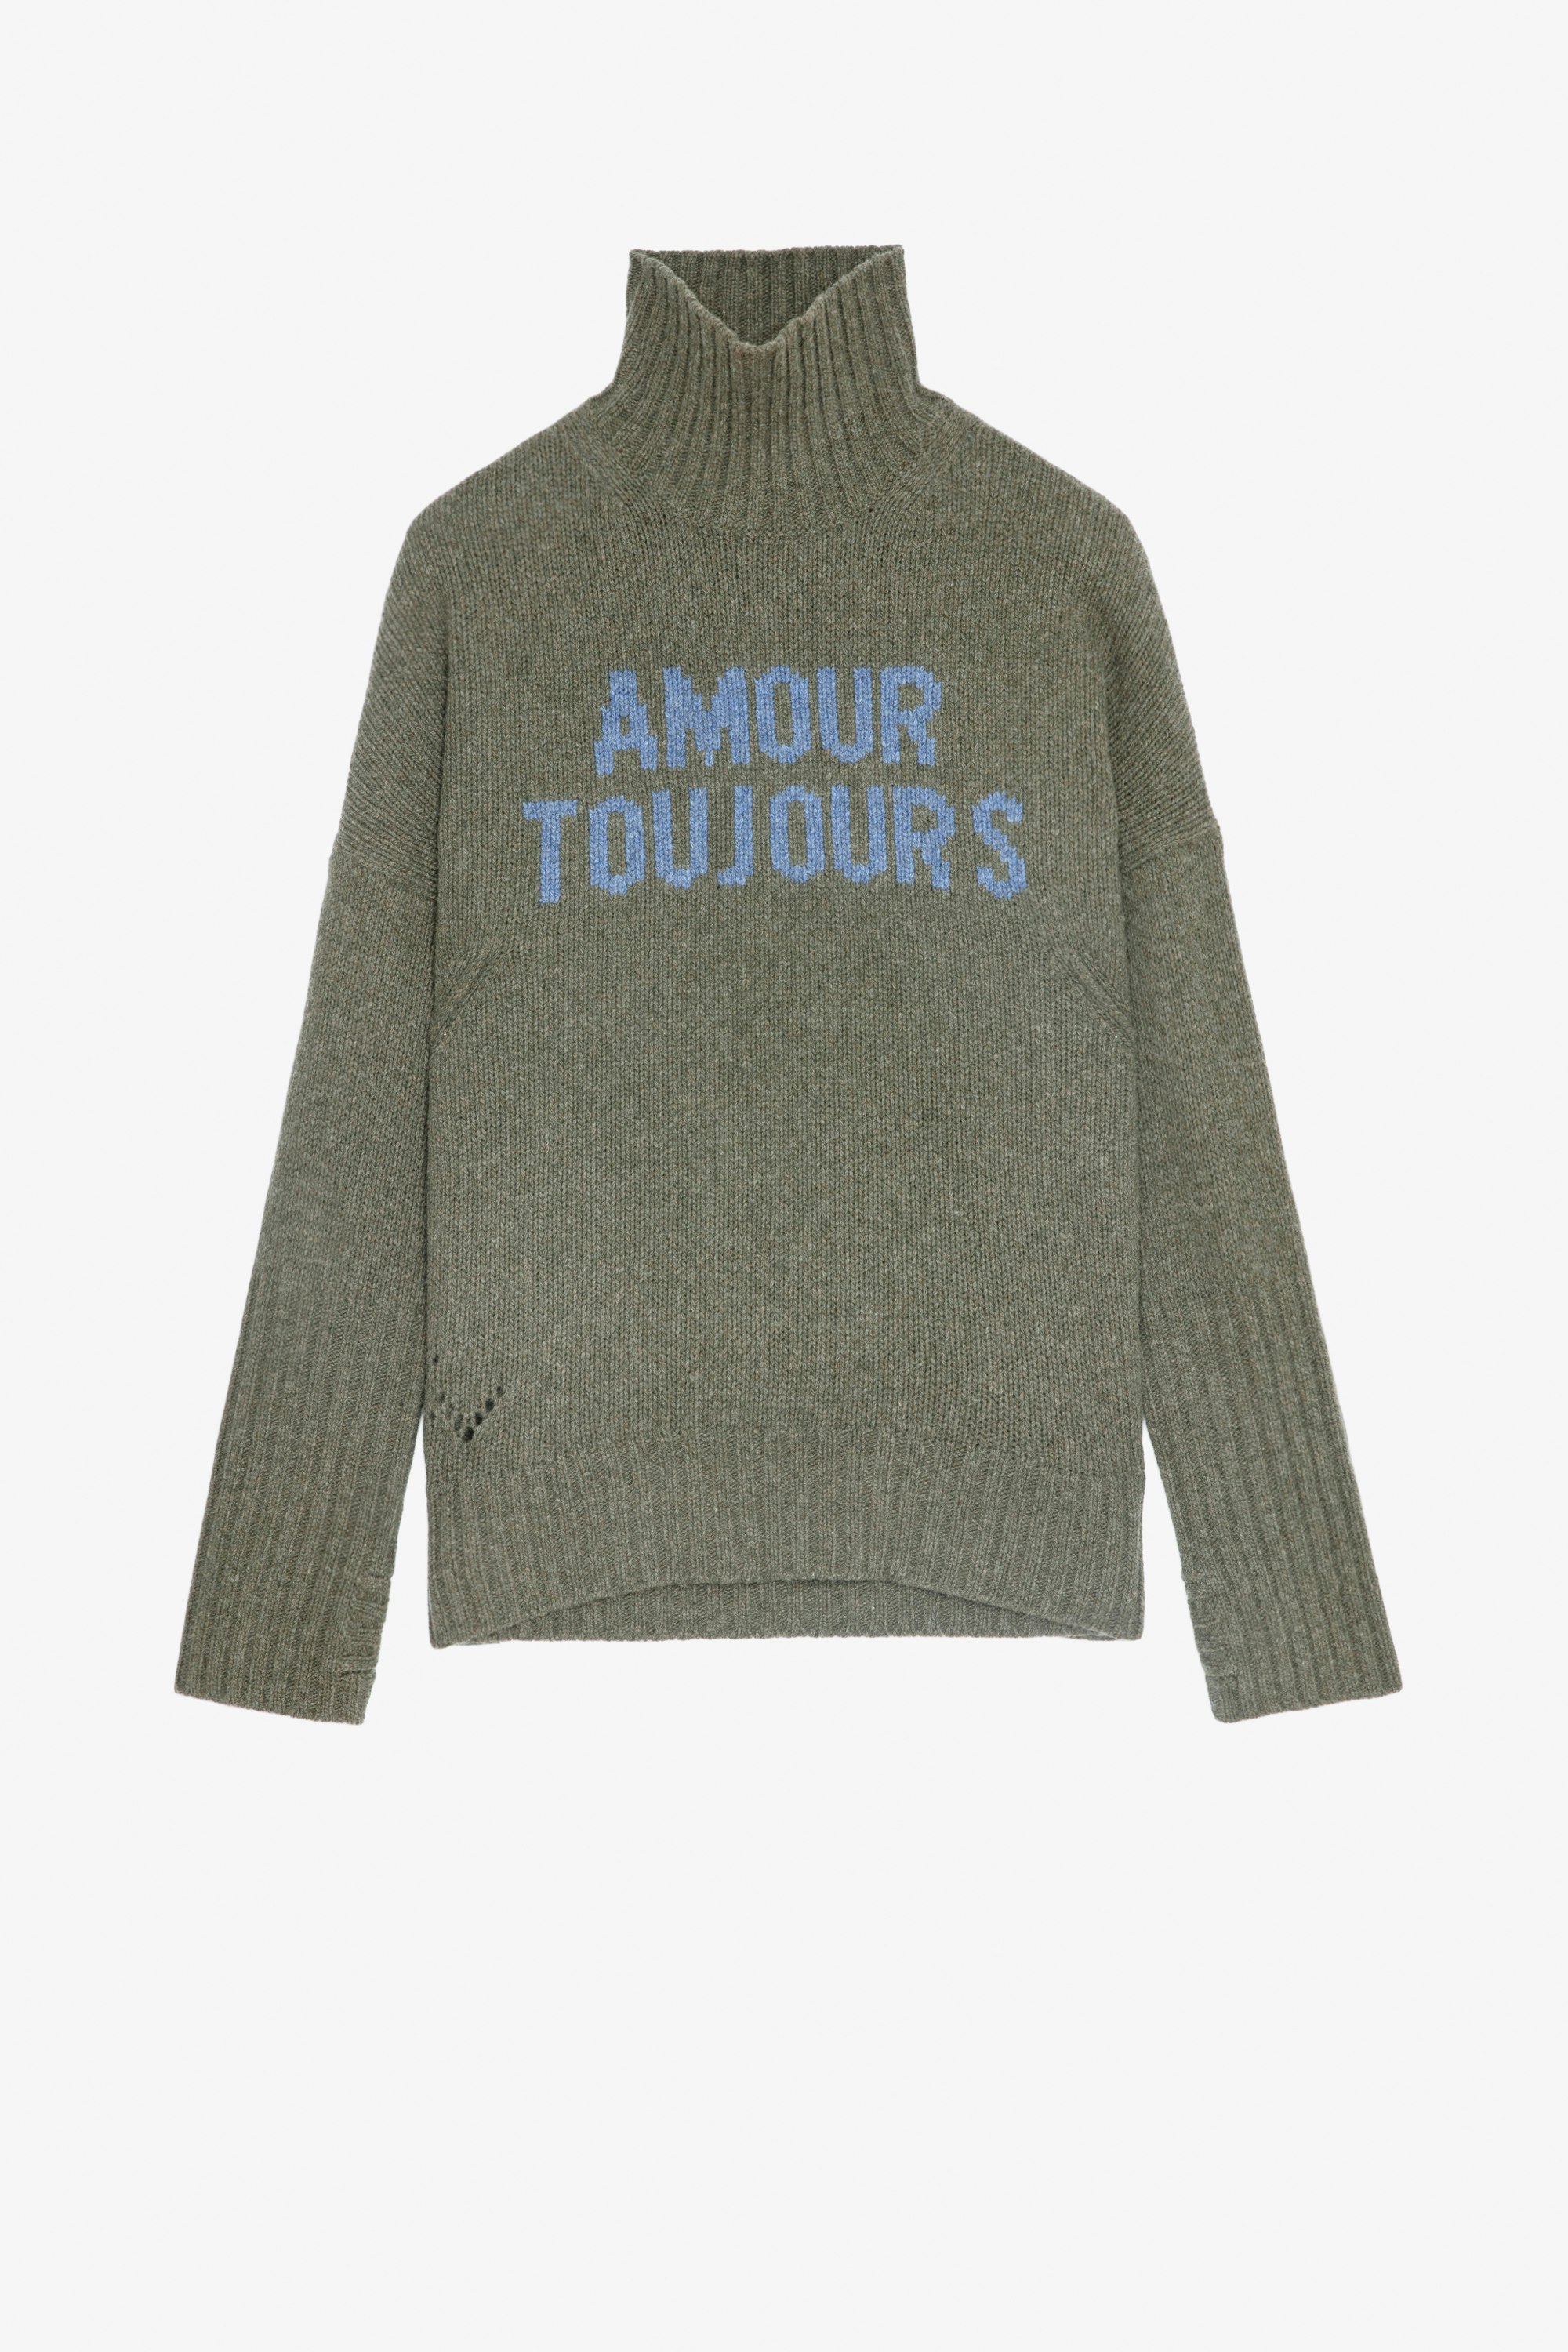 Alma ニット Women’s high-necked khaki merino wool sweater featuring “Amour Toujours” slogan